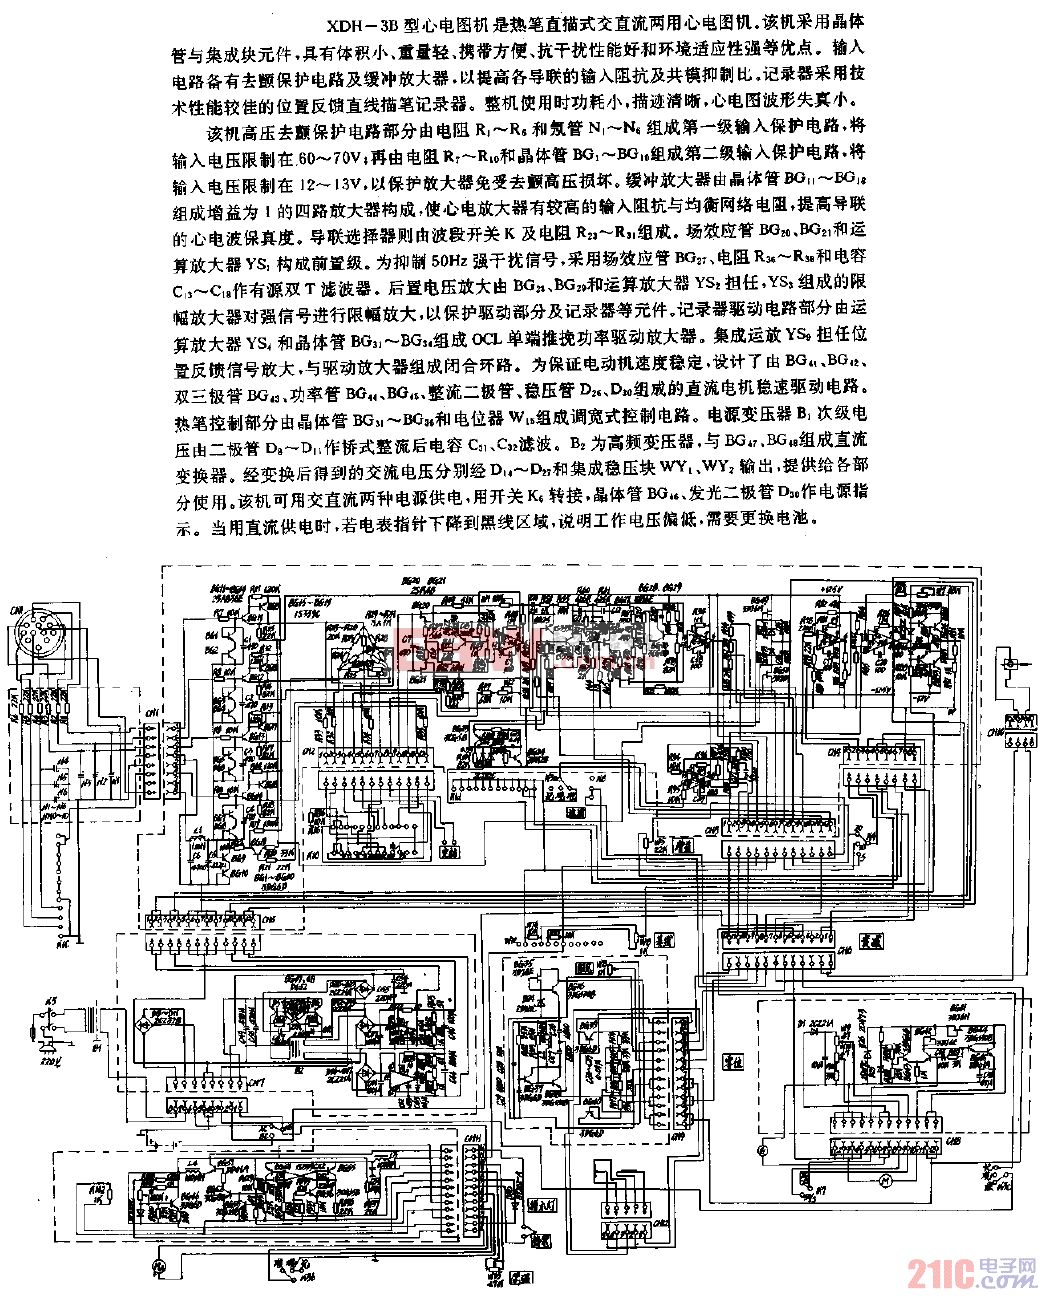 XDH-3B型心电图机电路.gif